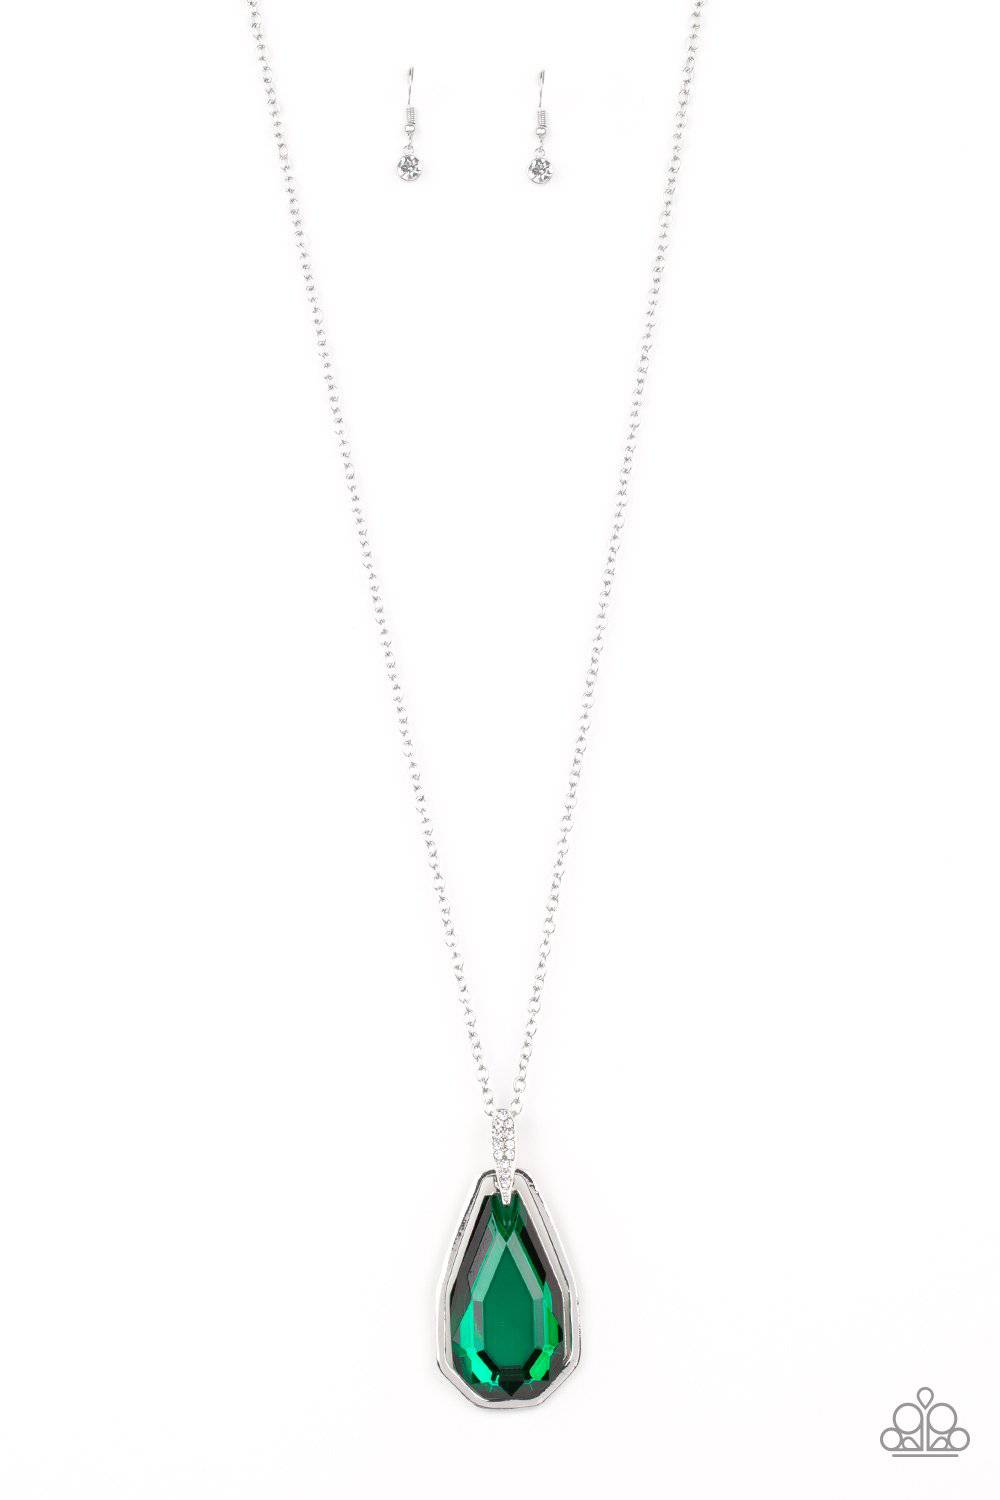 Maven Magic - Green Rhinestone Necklace -Paparazzi Accessories - GlaMarous Titi Jewels